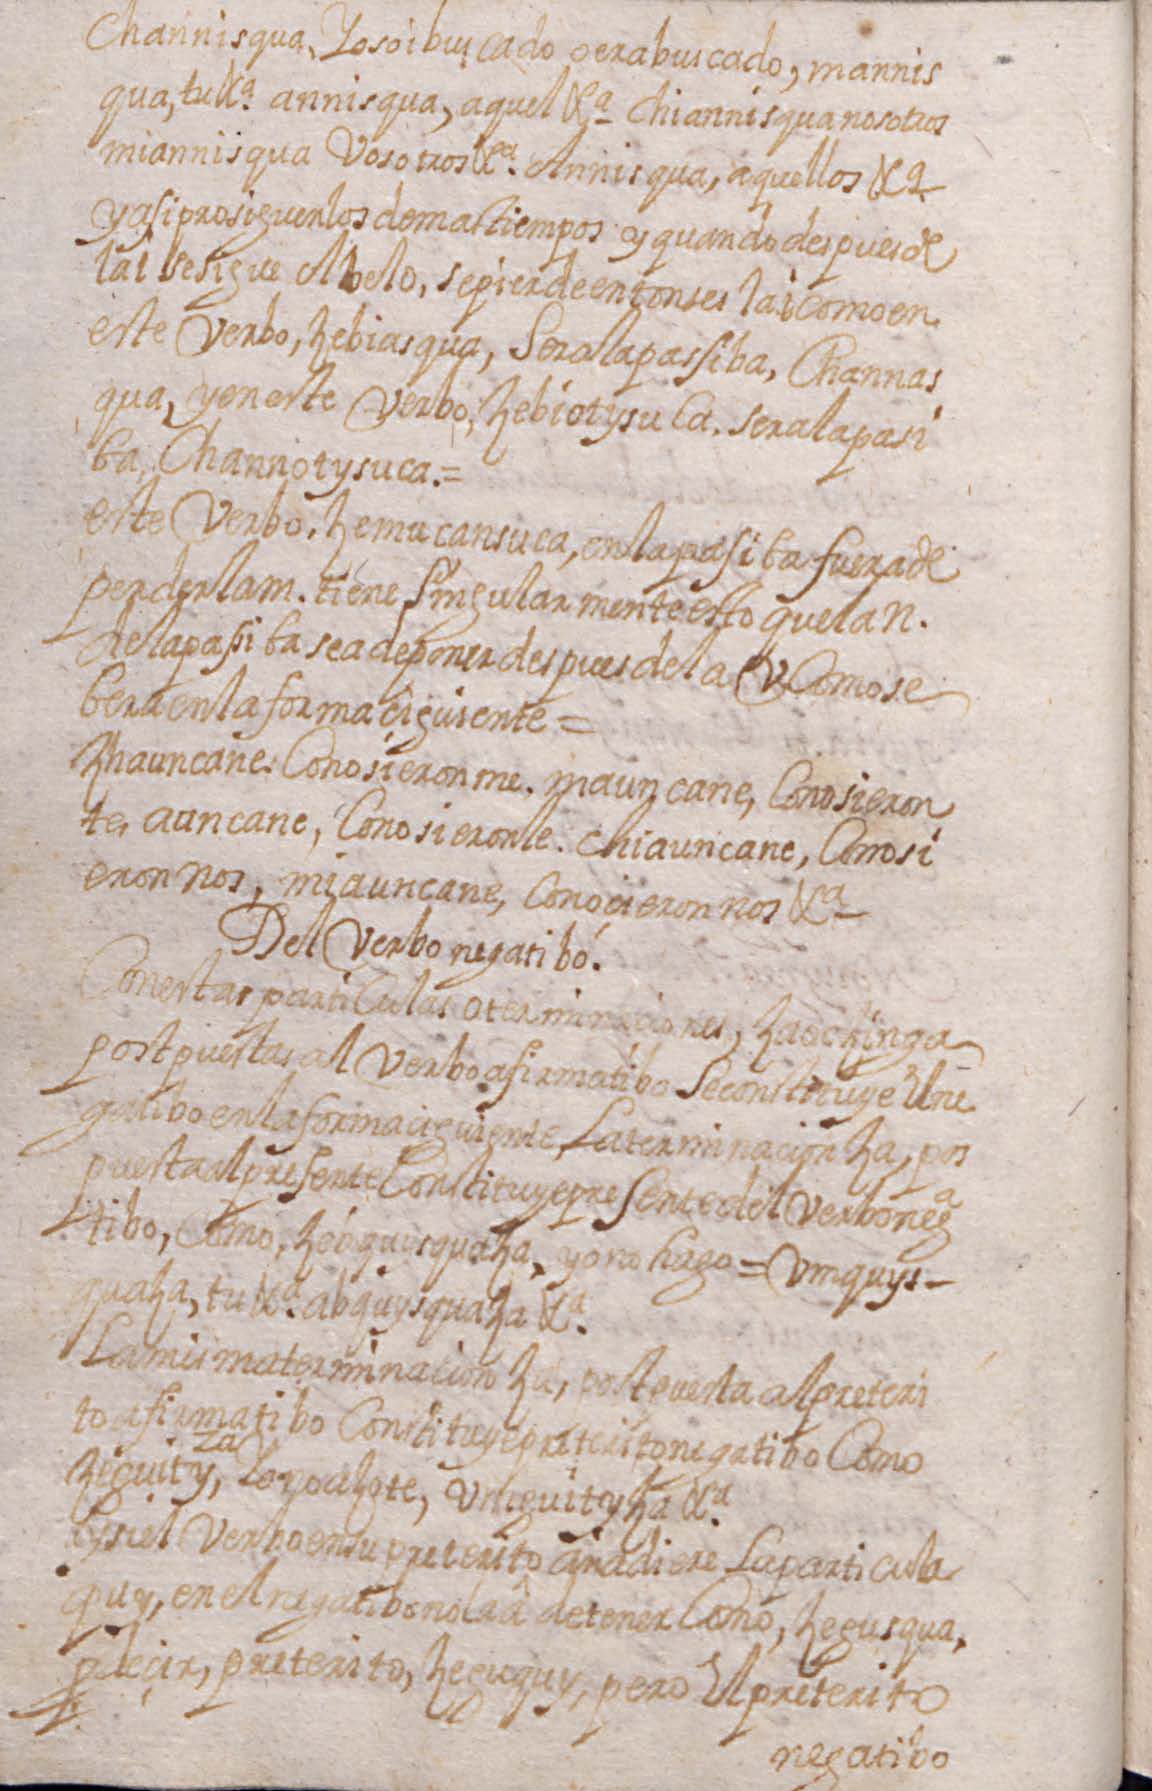 Manuscrito 158 BNC Gramatica - fol 21v.jpg